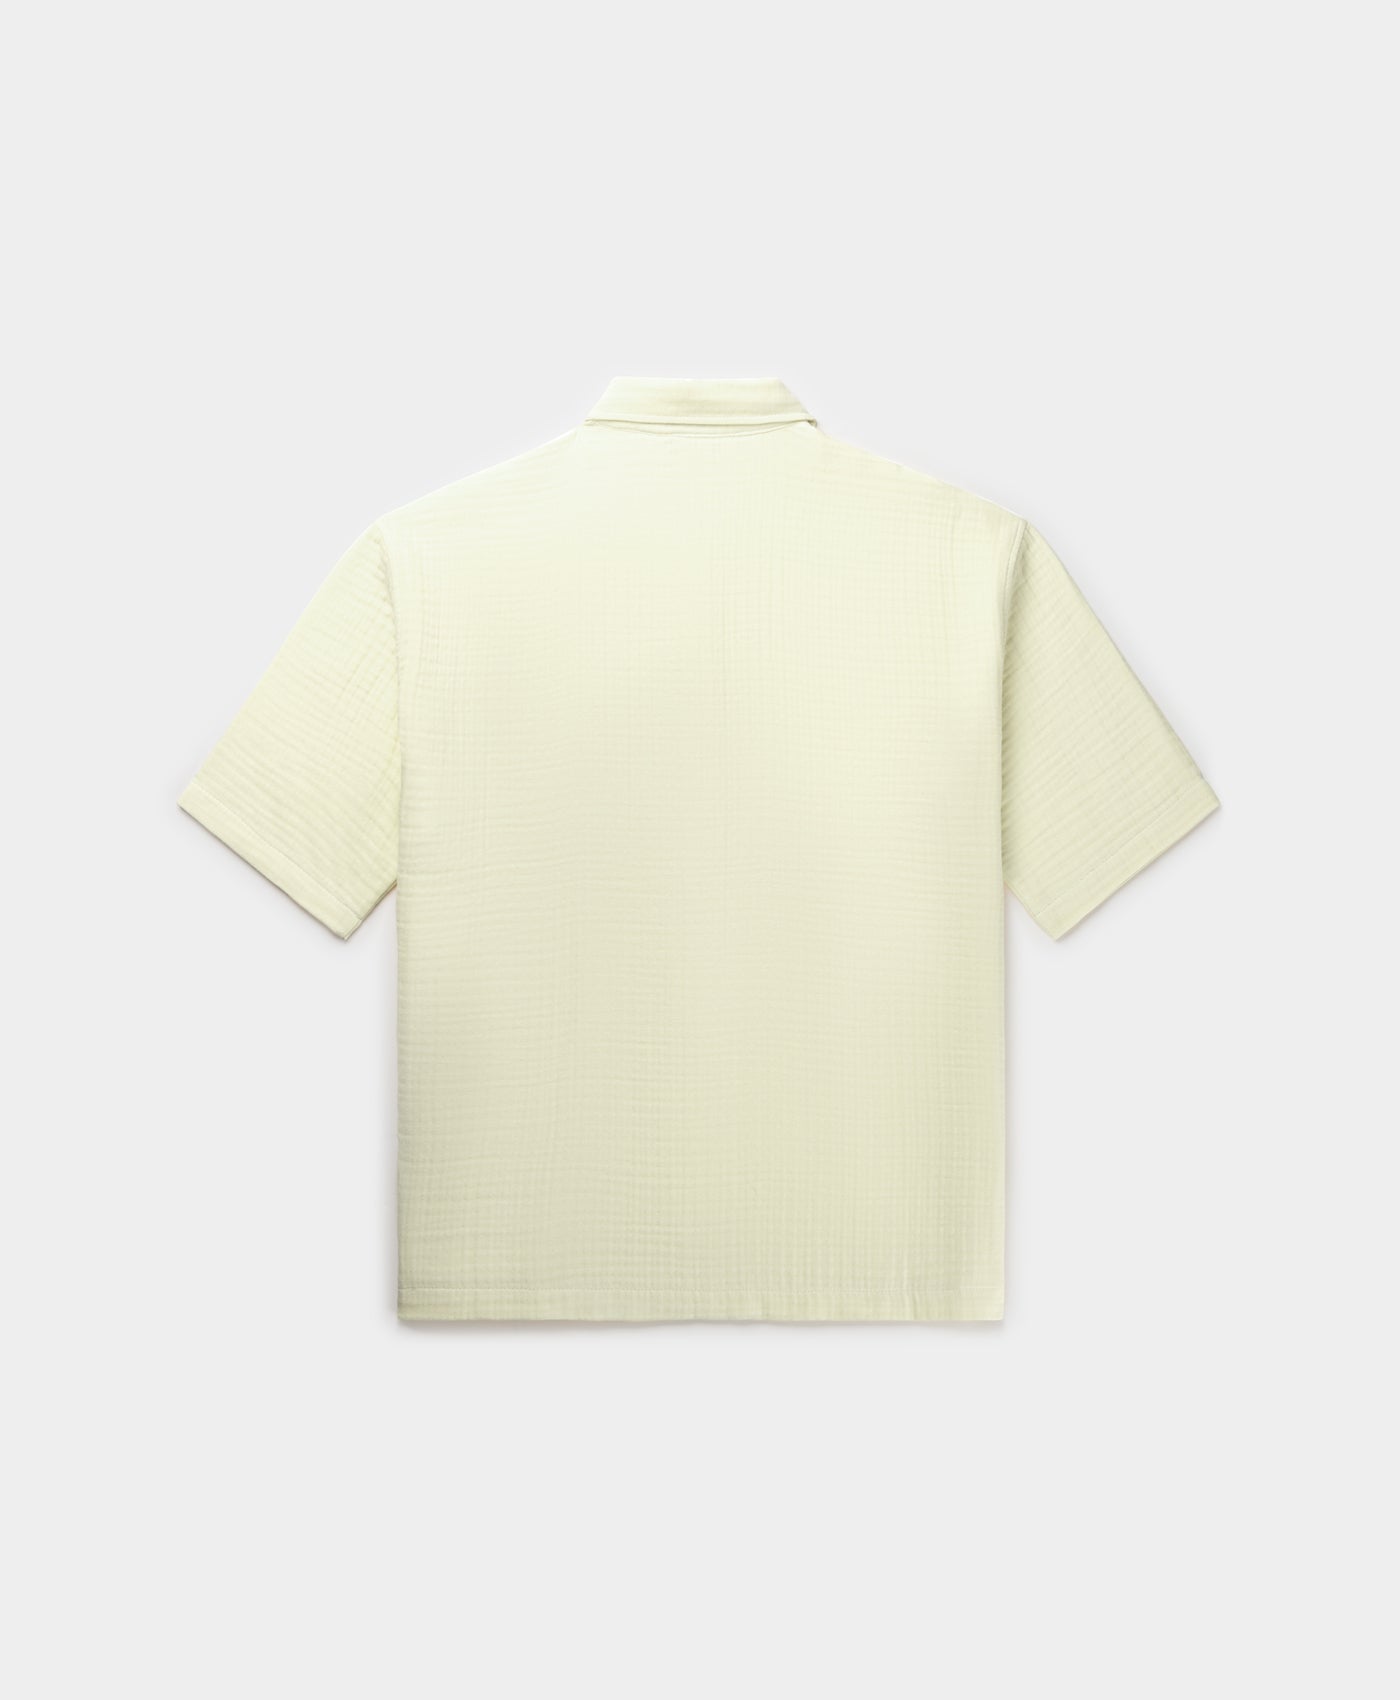 DP - Icing Yellow Enzi Seersucker Shirt - Packshot - Rear